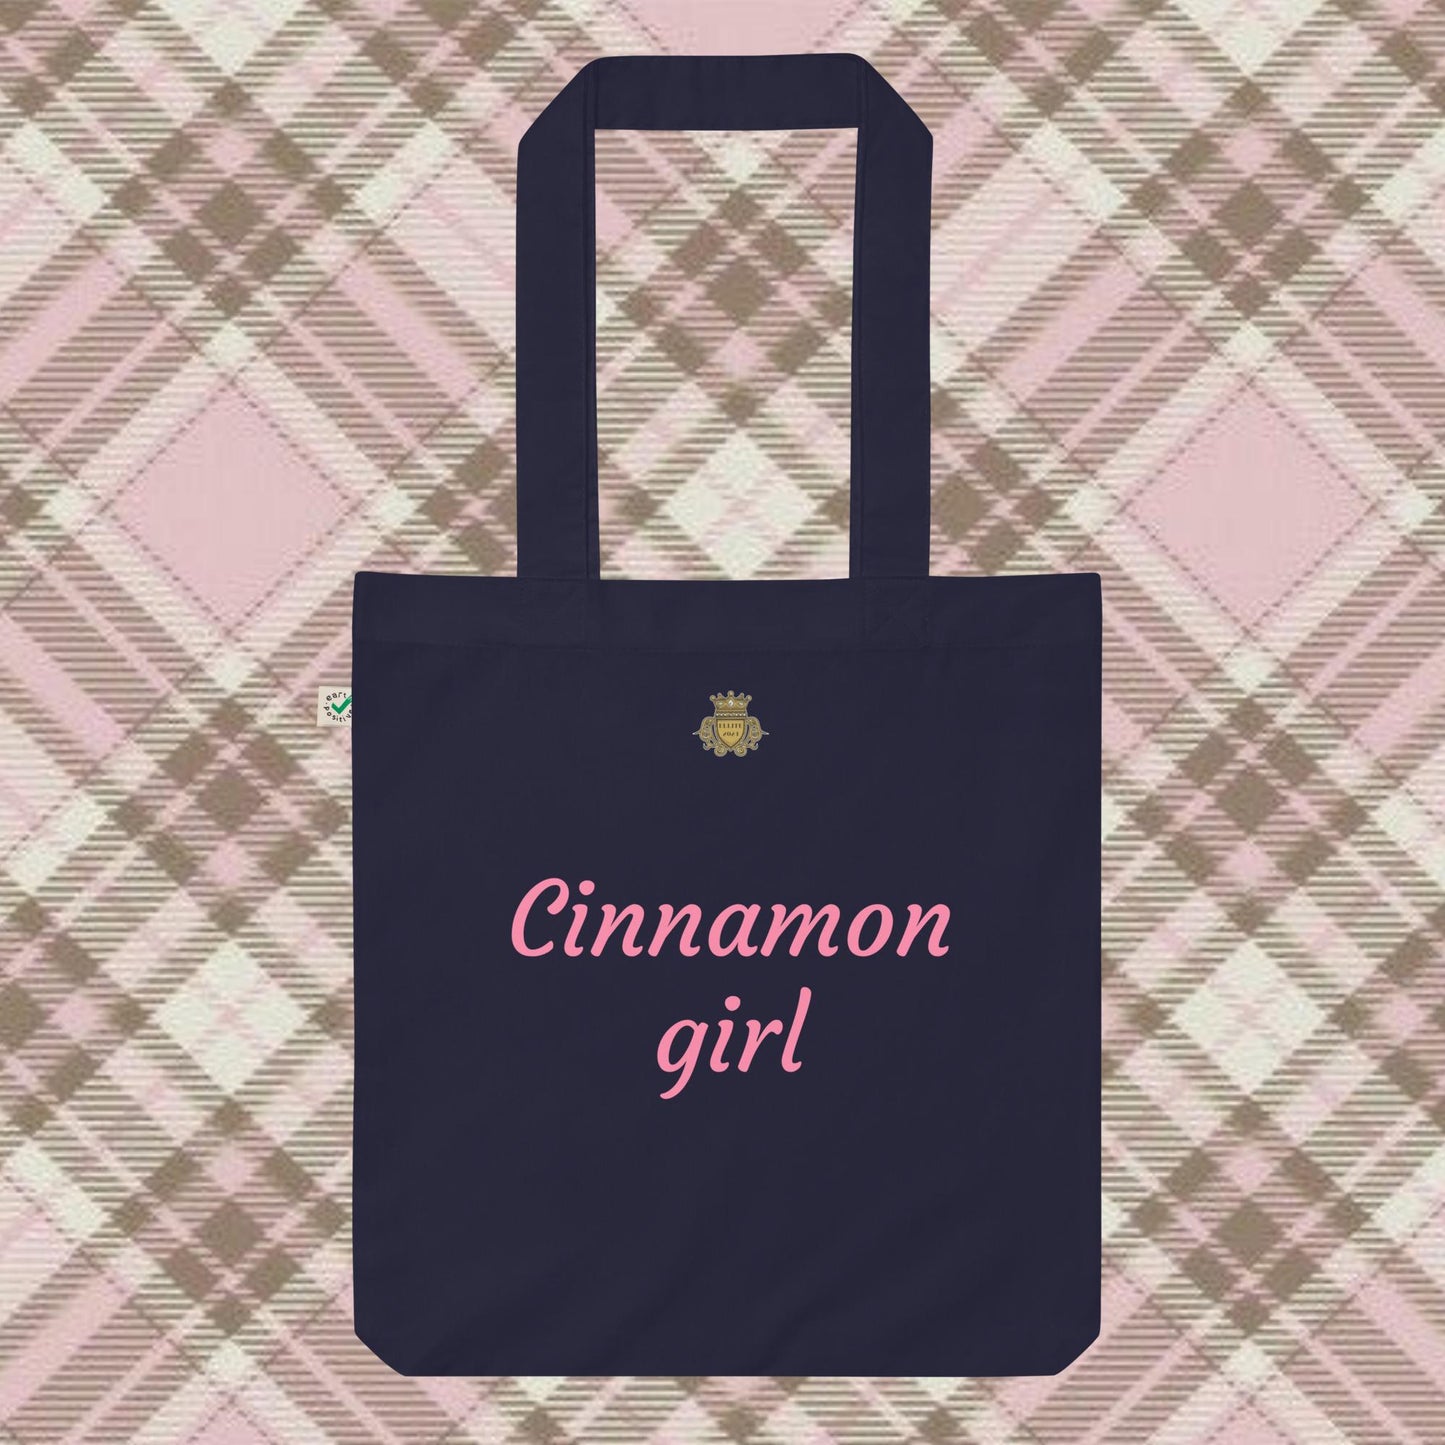 Cinnamon girl tote bag